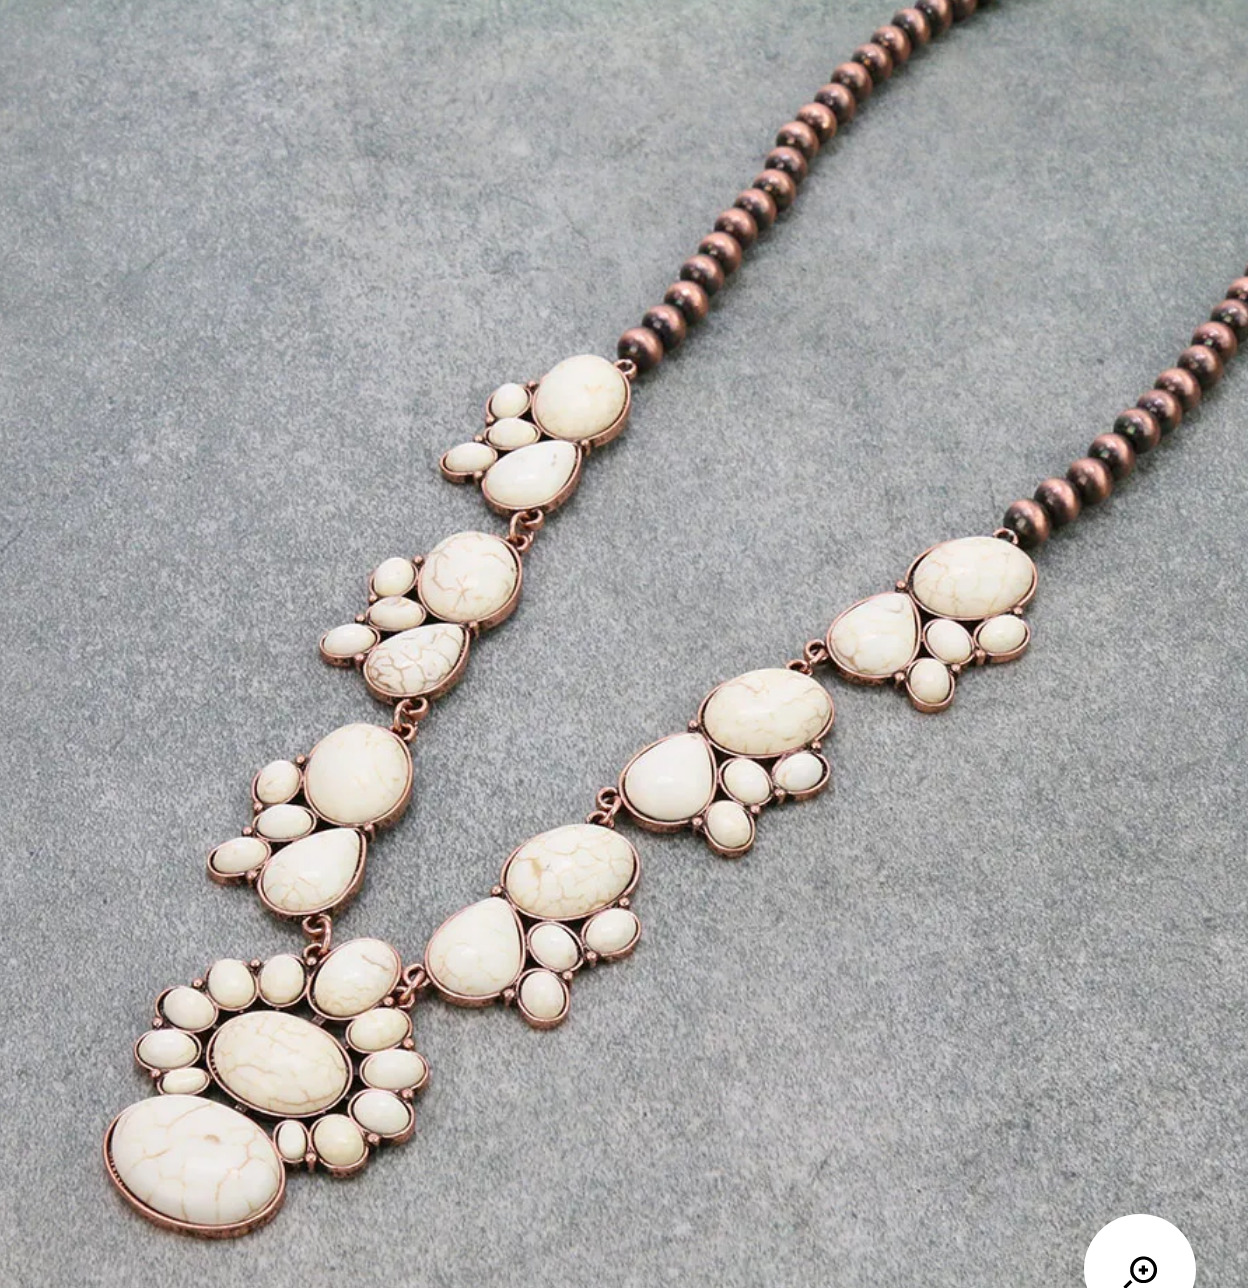 Western Squash Blossom Necklace